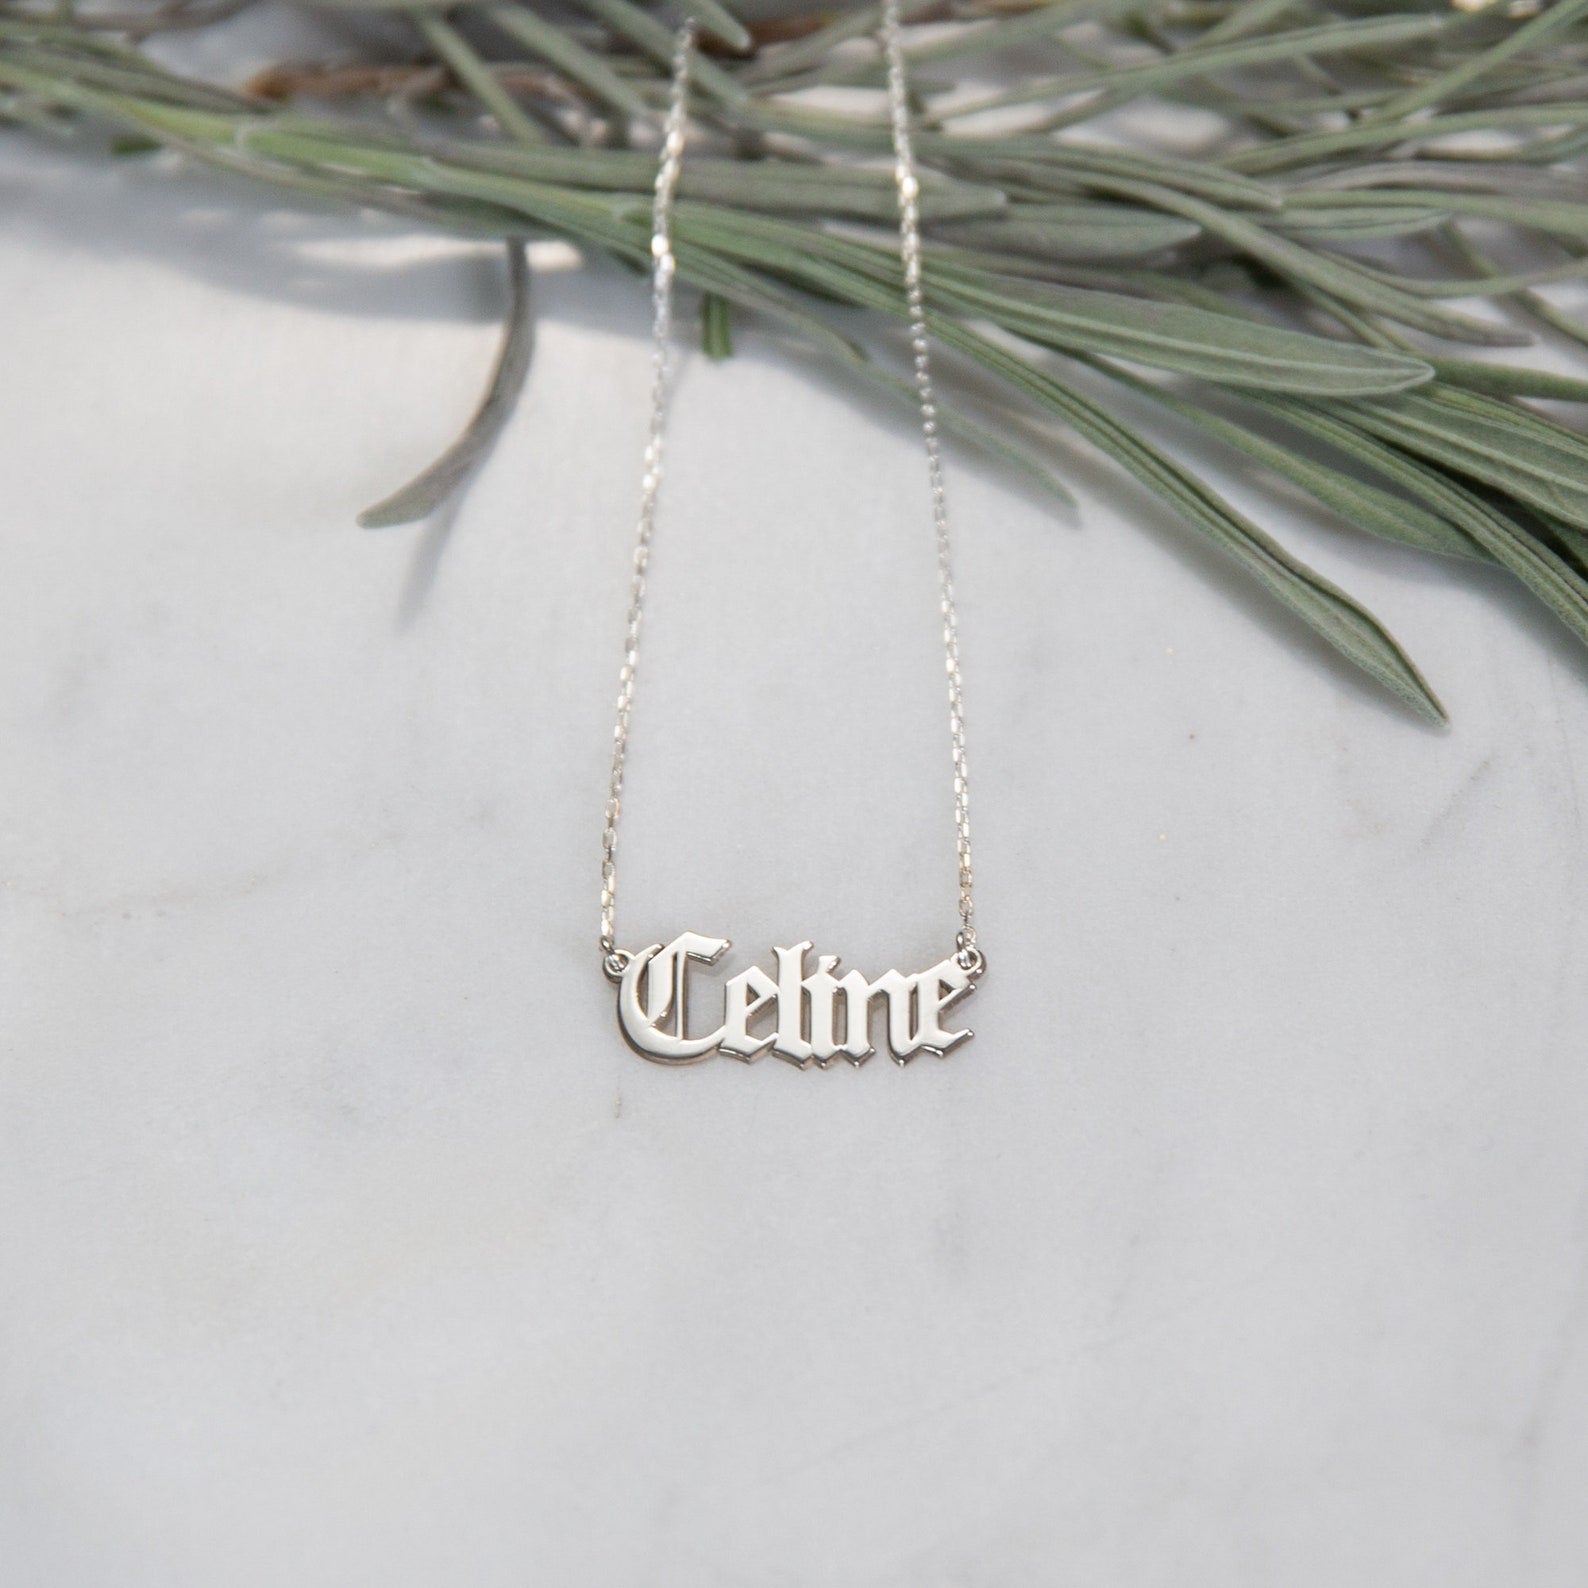 Custom Name Necklace - Old English